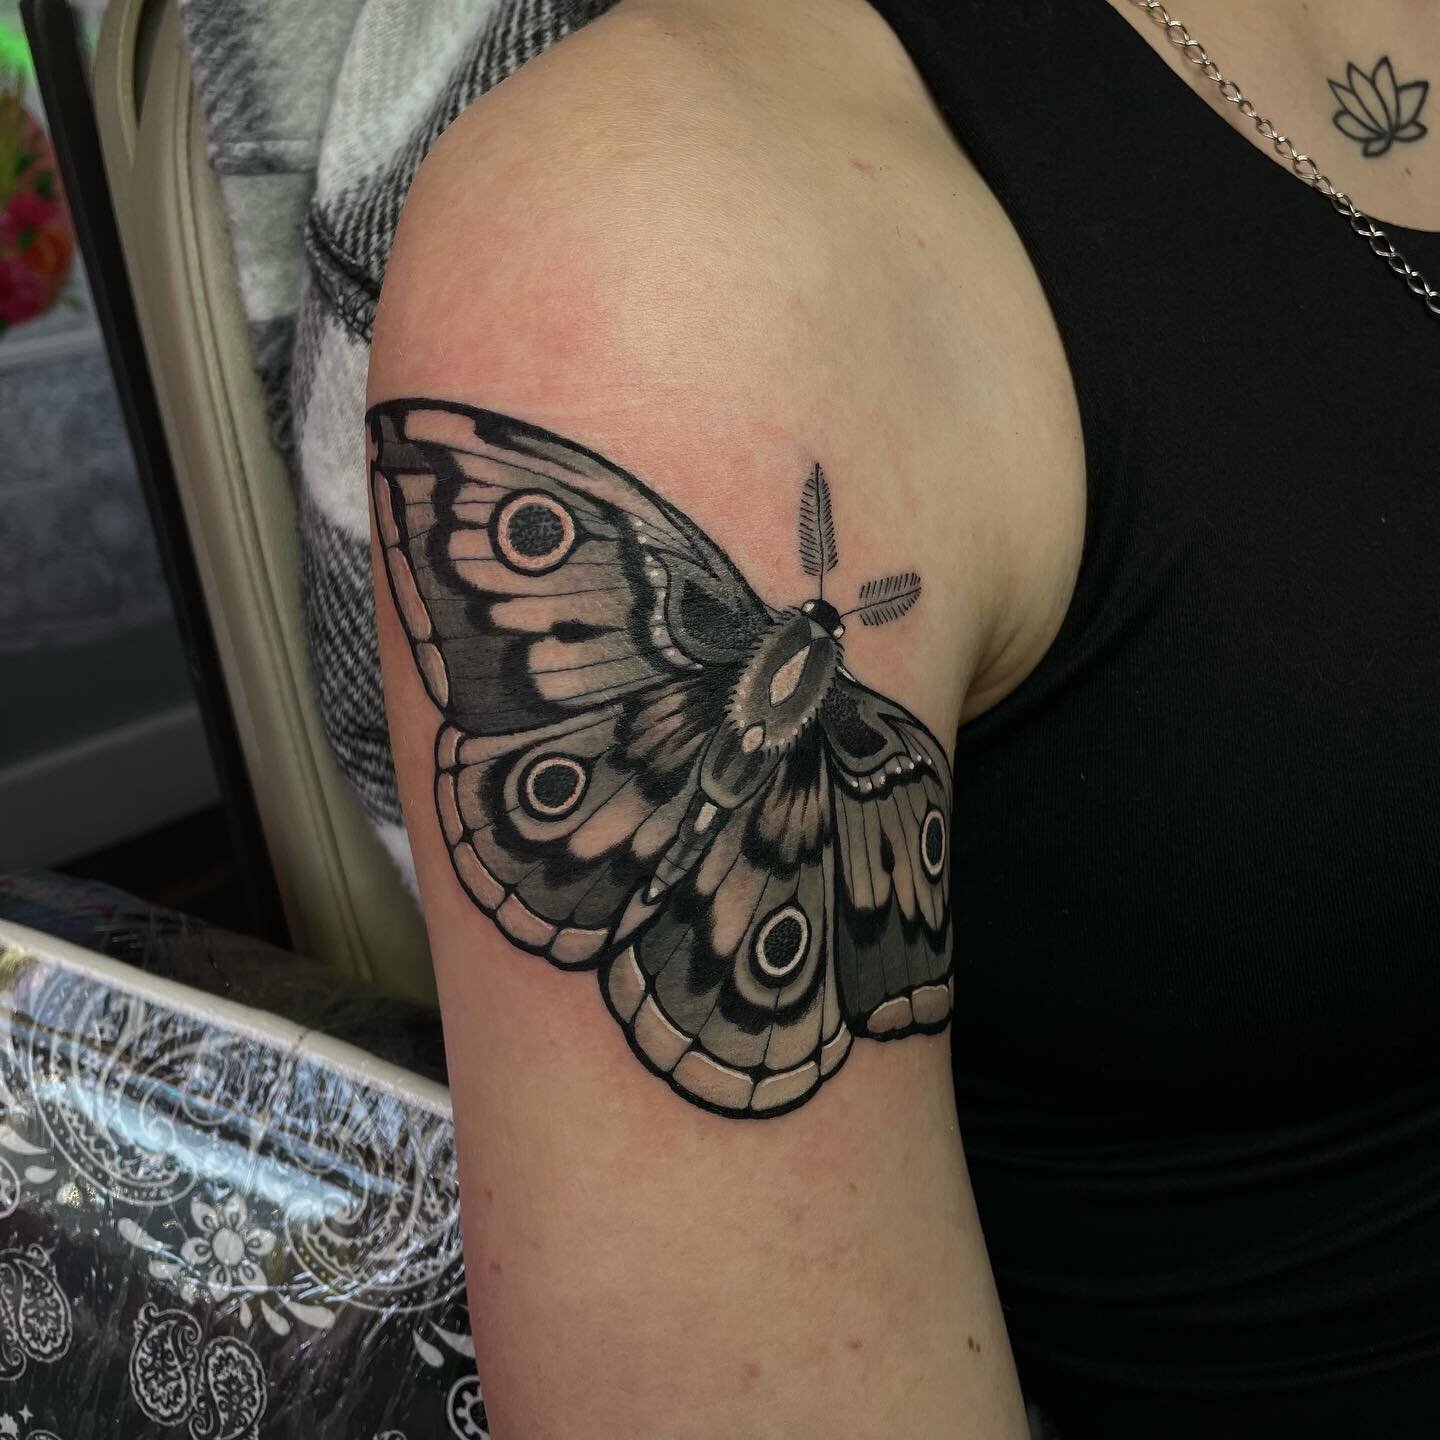 Moth today 🥰 
.
.
.
#tattoo #tattoos #ink #moth #mothtattoo #neotrad #neotraditional #neotradmoth